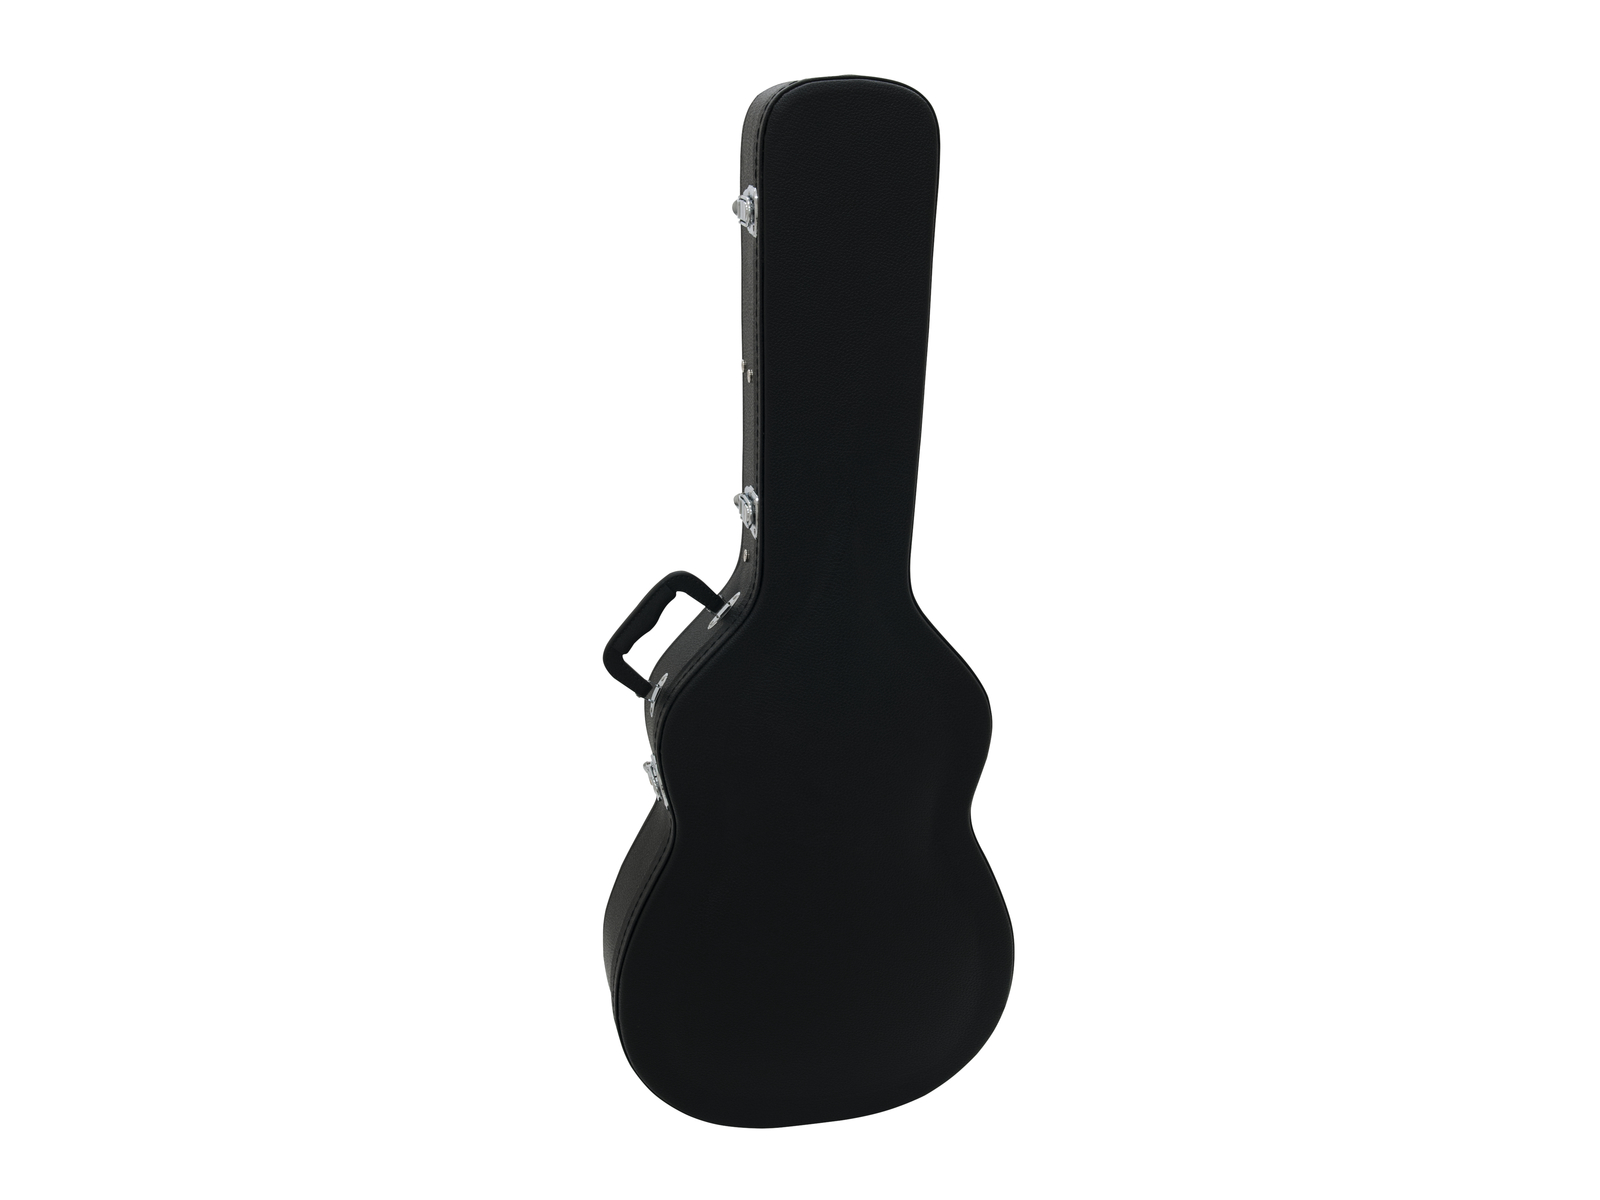 DIMAVERY Form-Case Western-Gitarre, schwarz